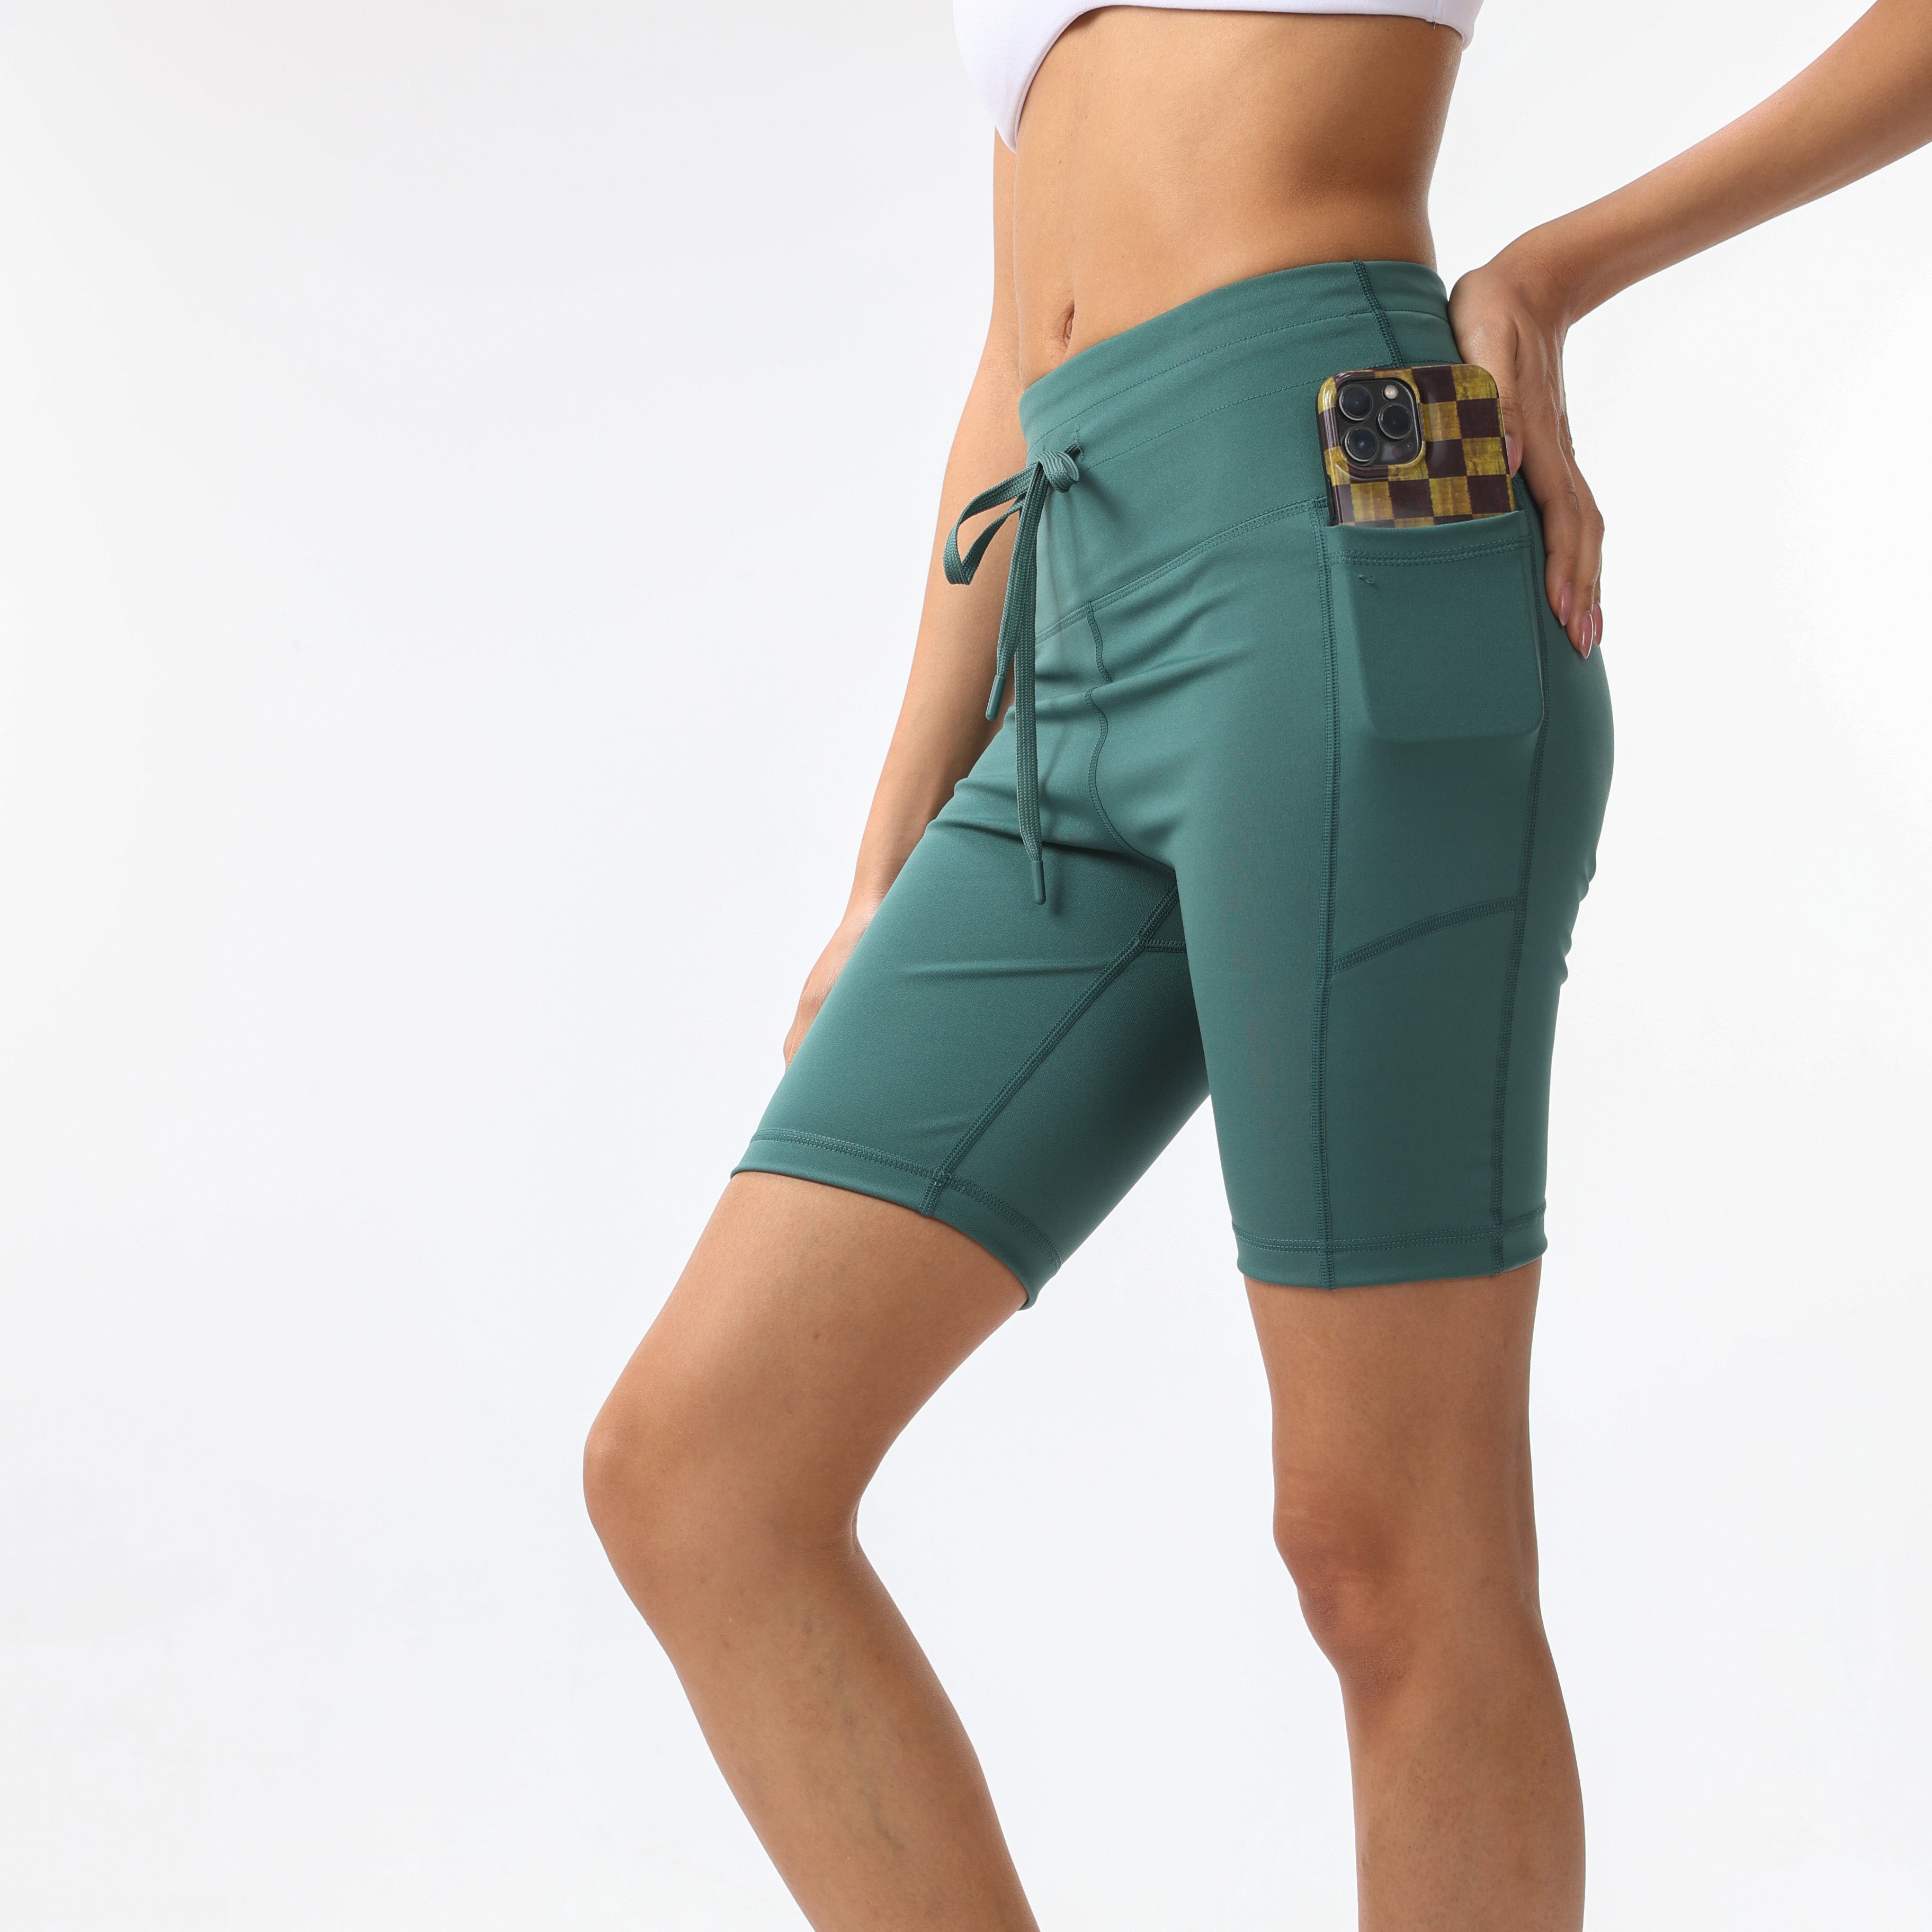 High Waist Sport Yoga Shorts with Side Pocket